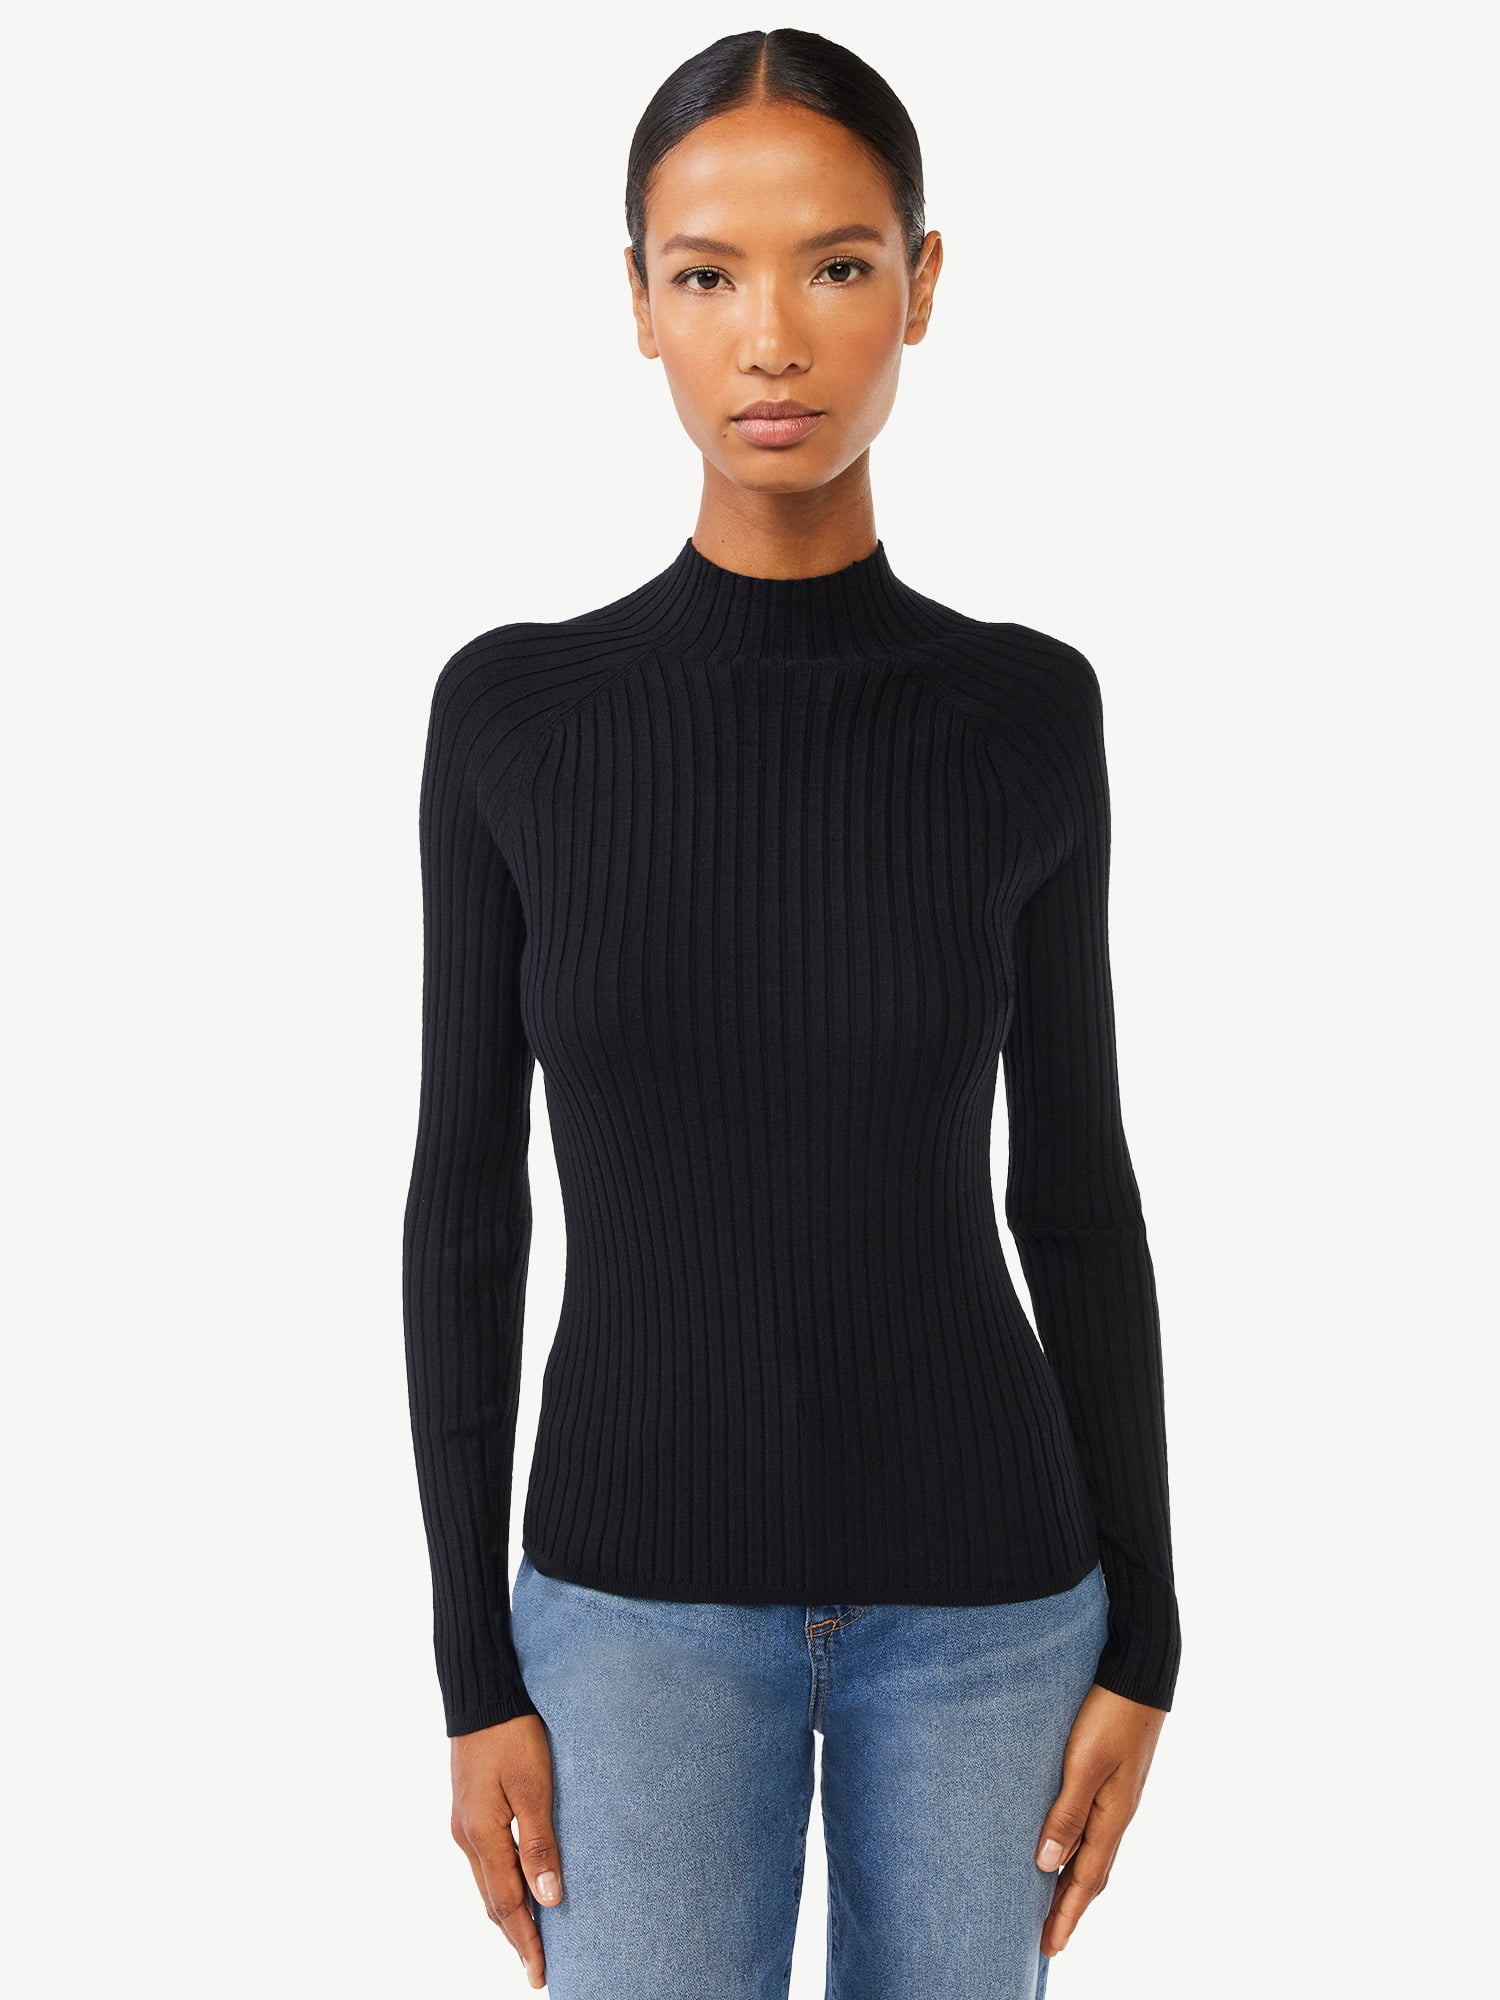 Scoop Women's Flat Rib Turtleneck Sweater - Walmart.com